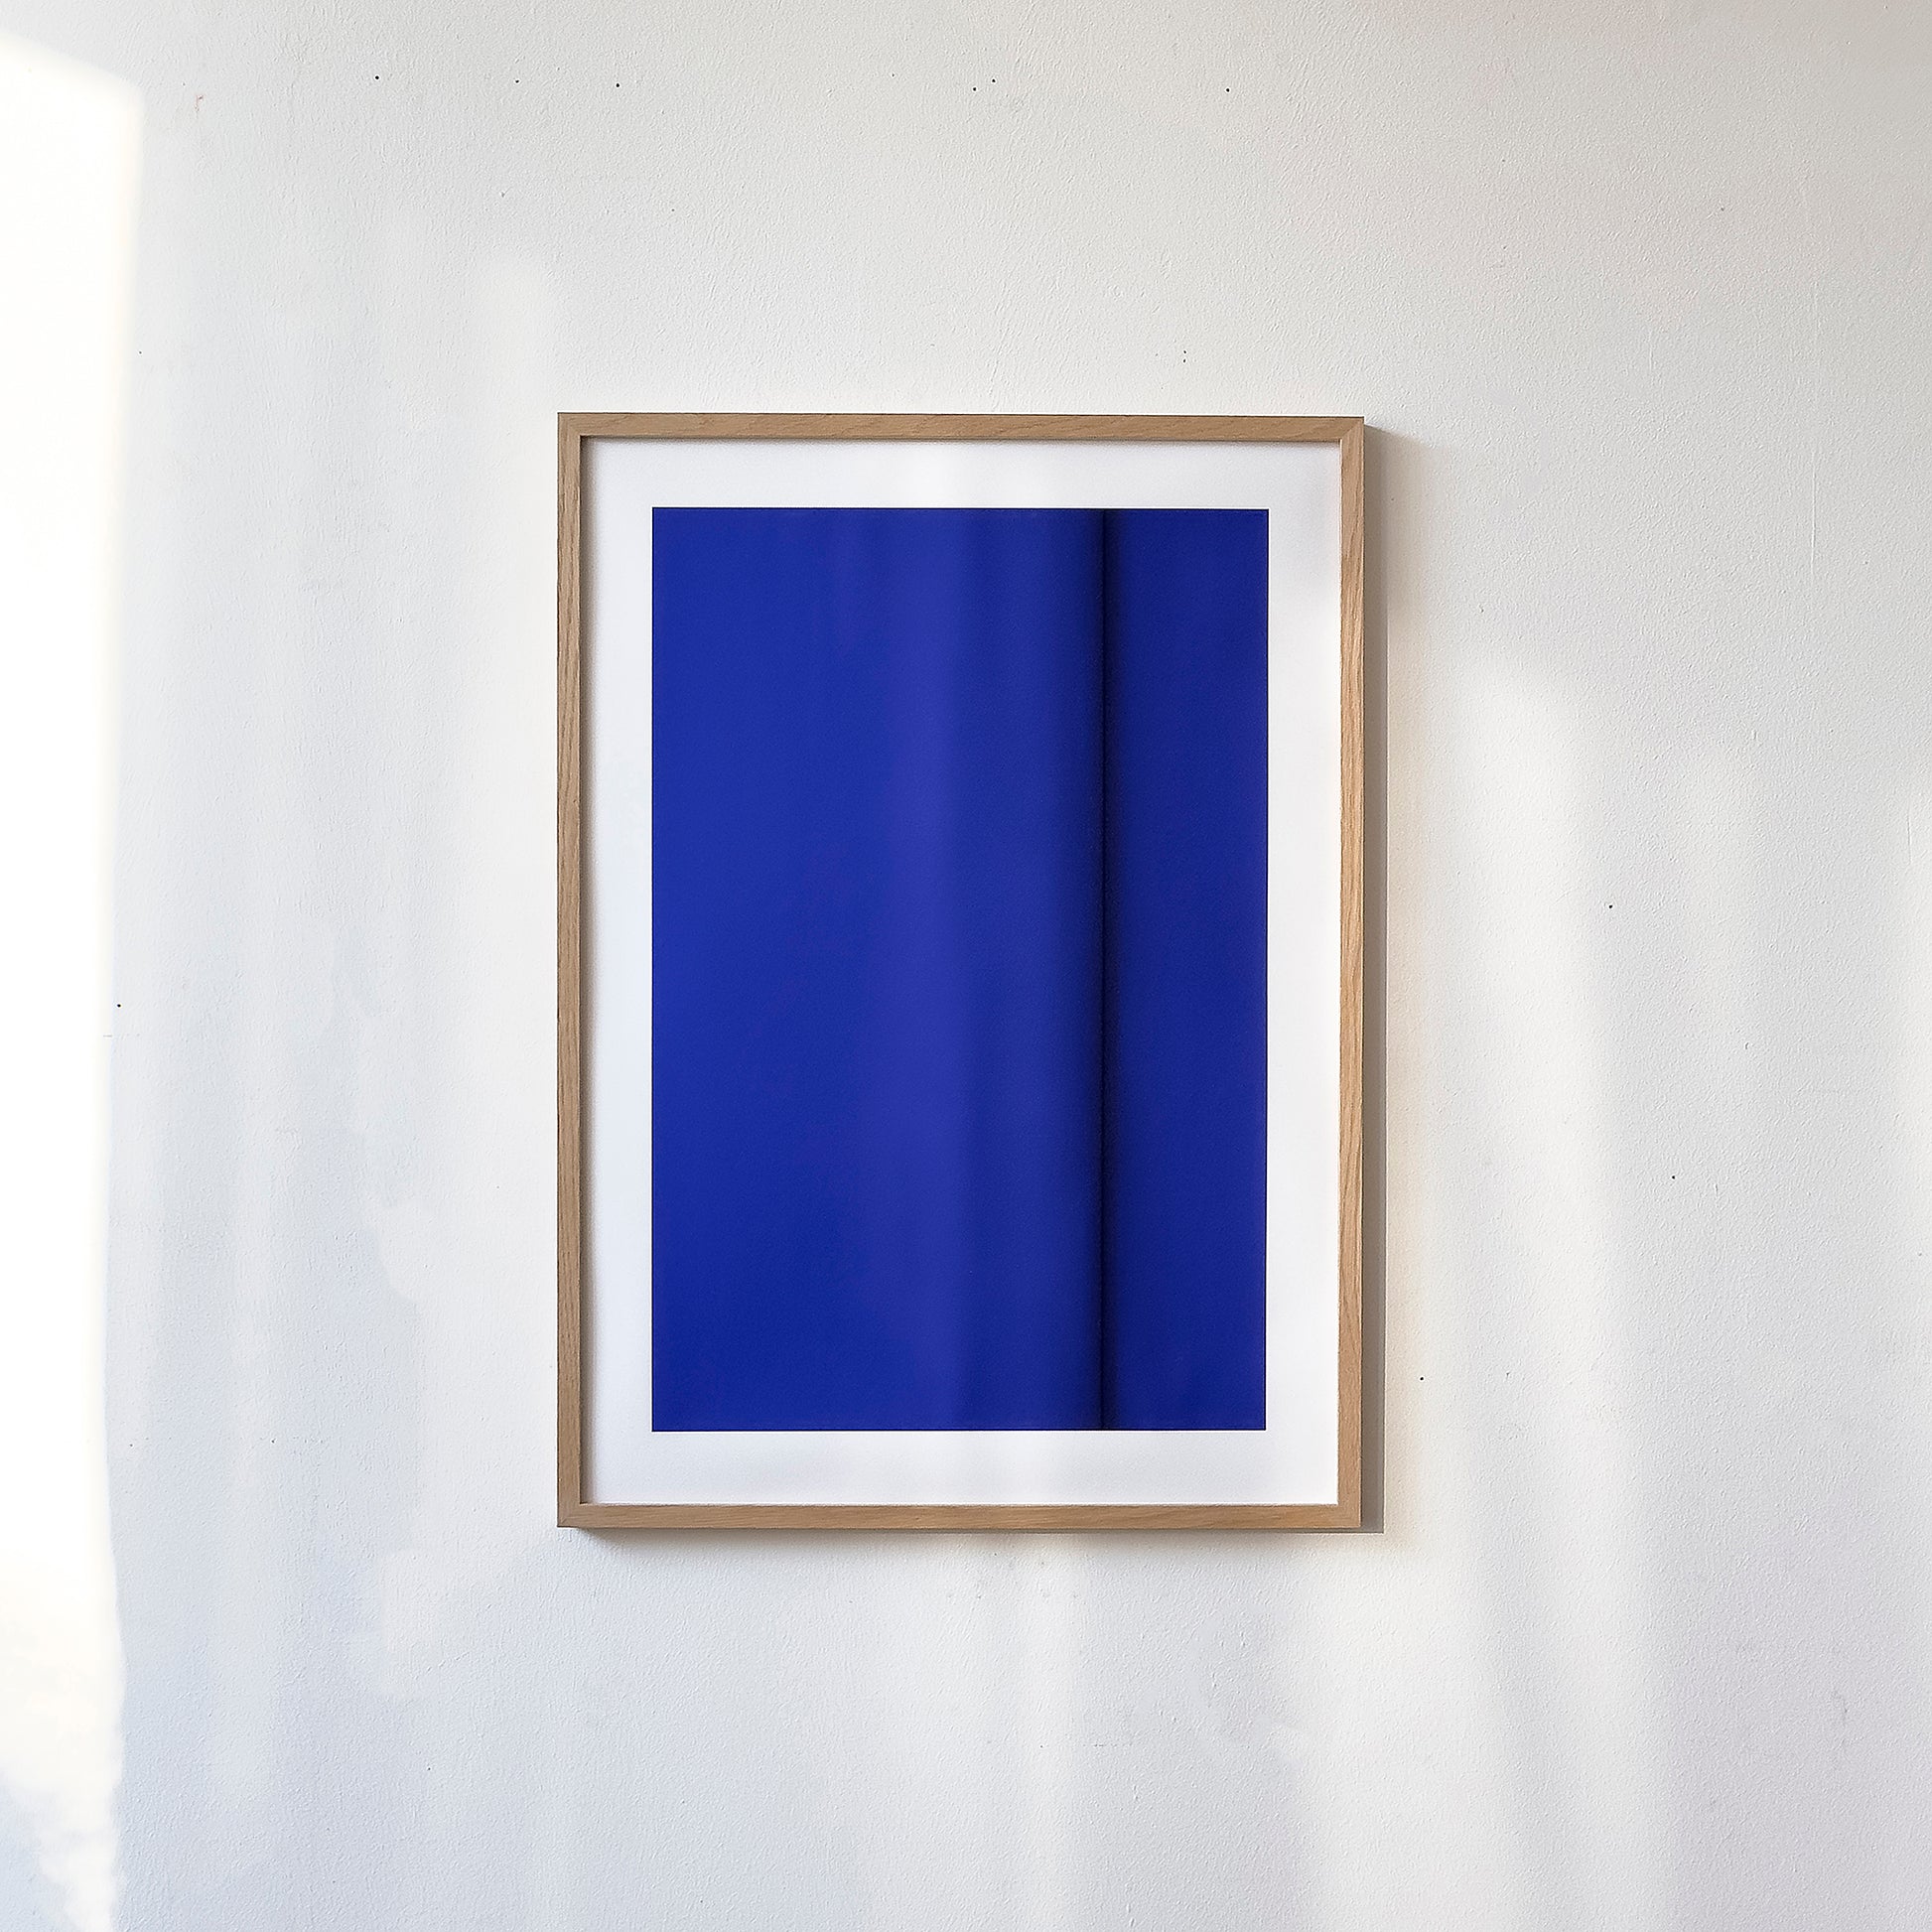 Kunstdruck im Bilderrahmen, Motiv blau monochrome Fuge, Titel IKB I